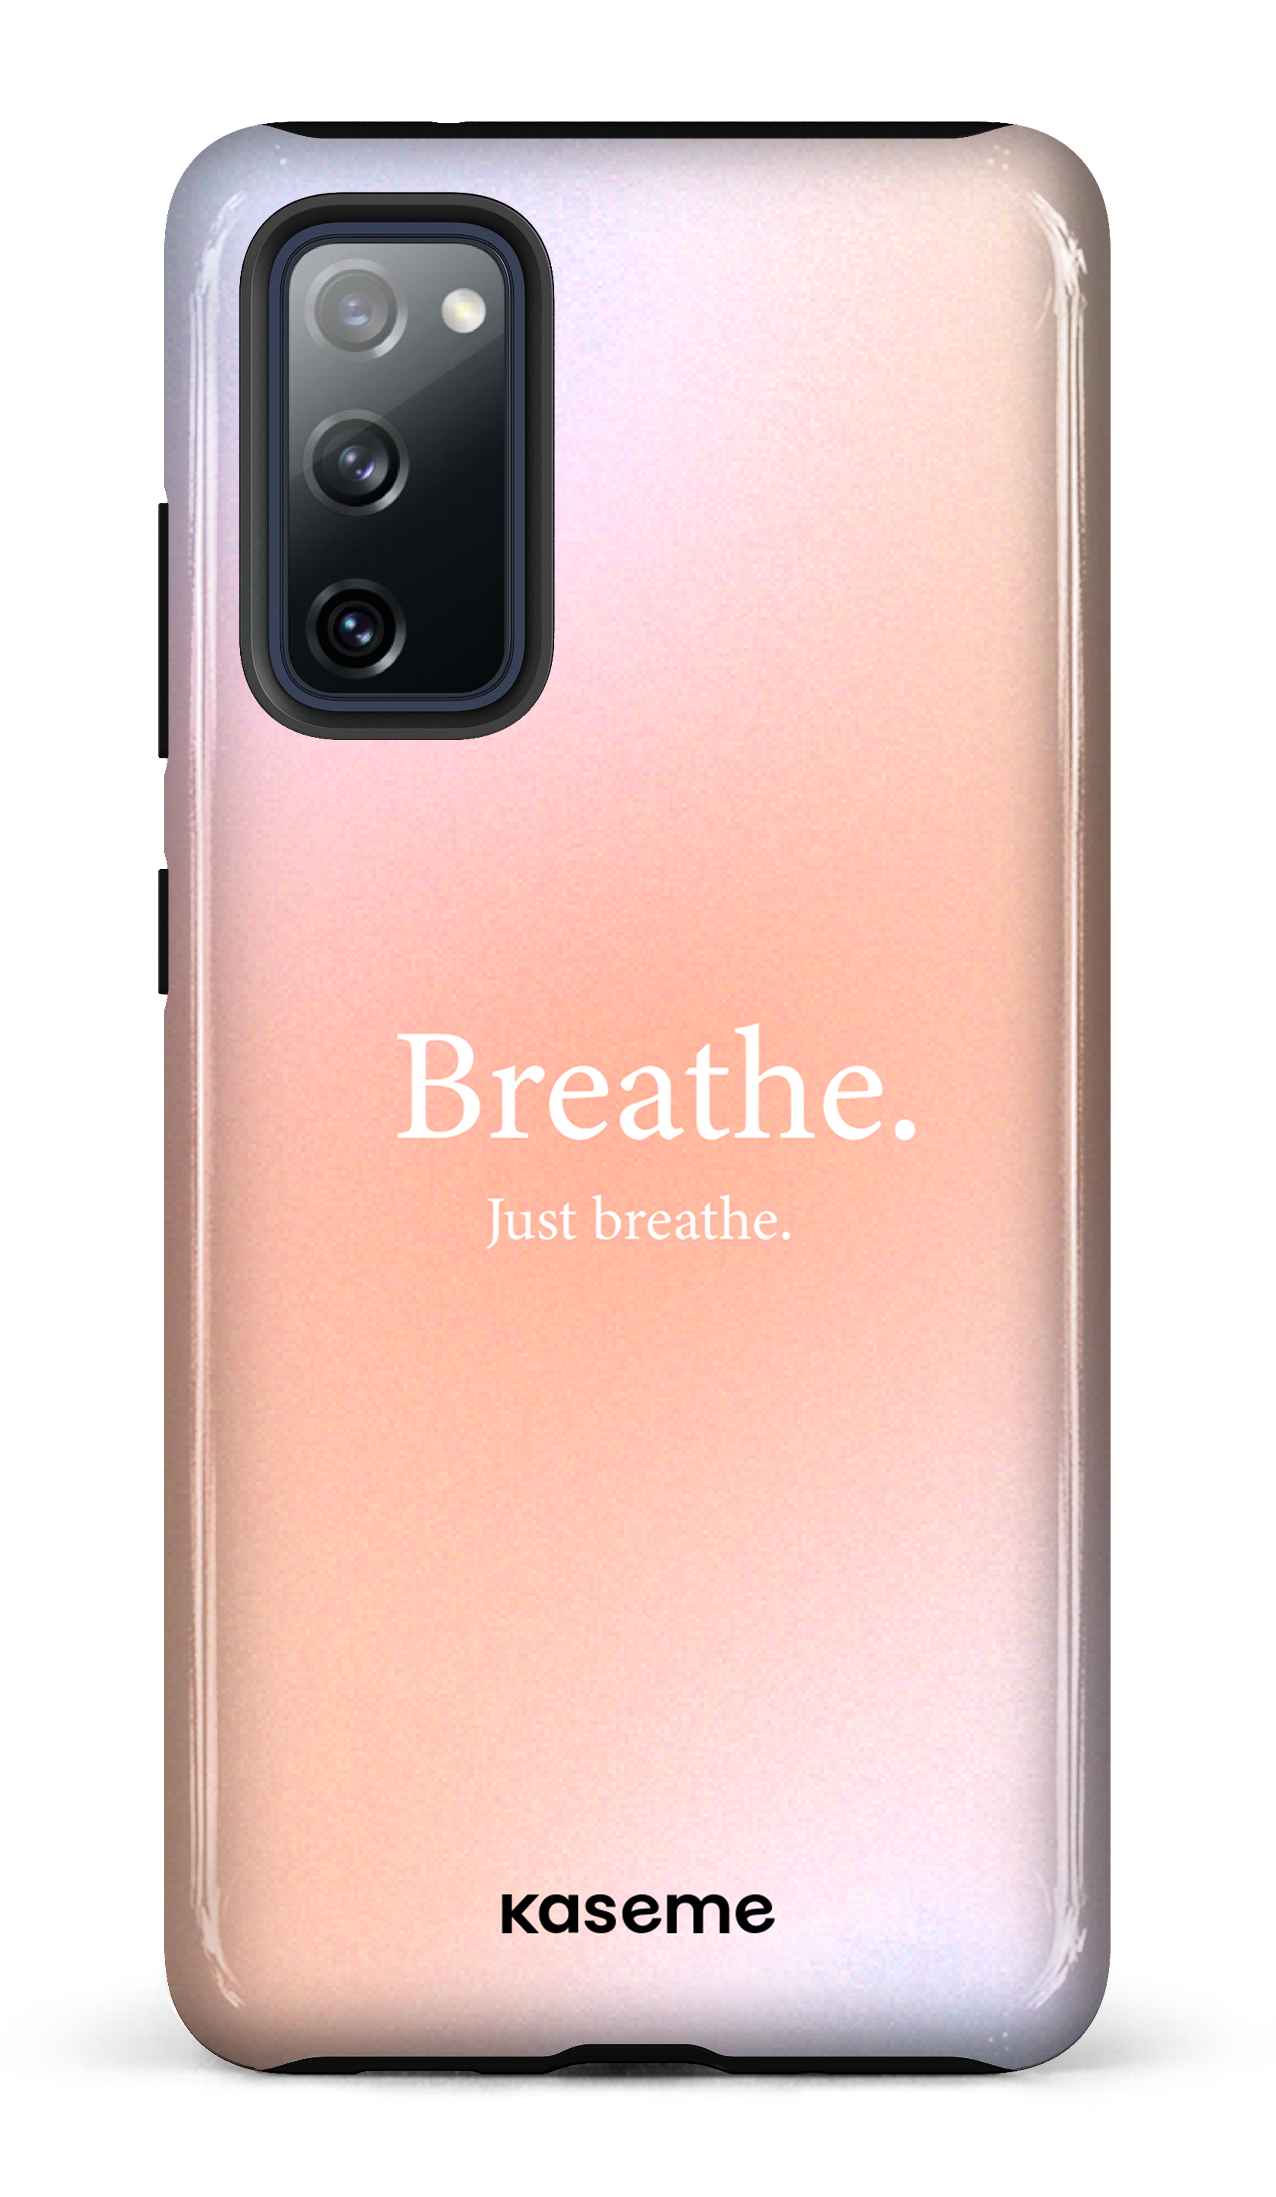 Just breathe - Galaxy S20 FE